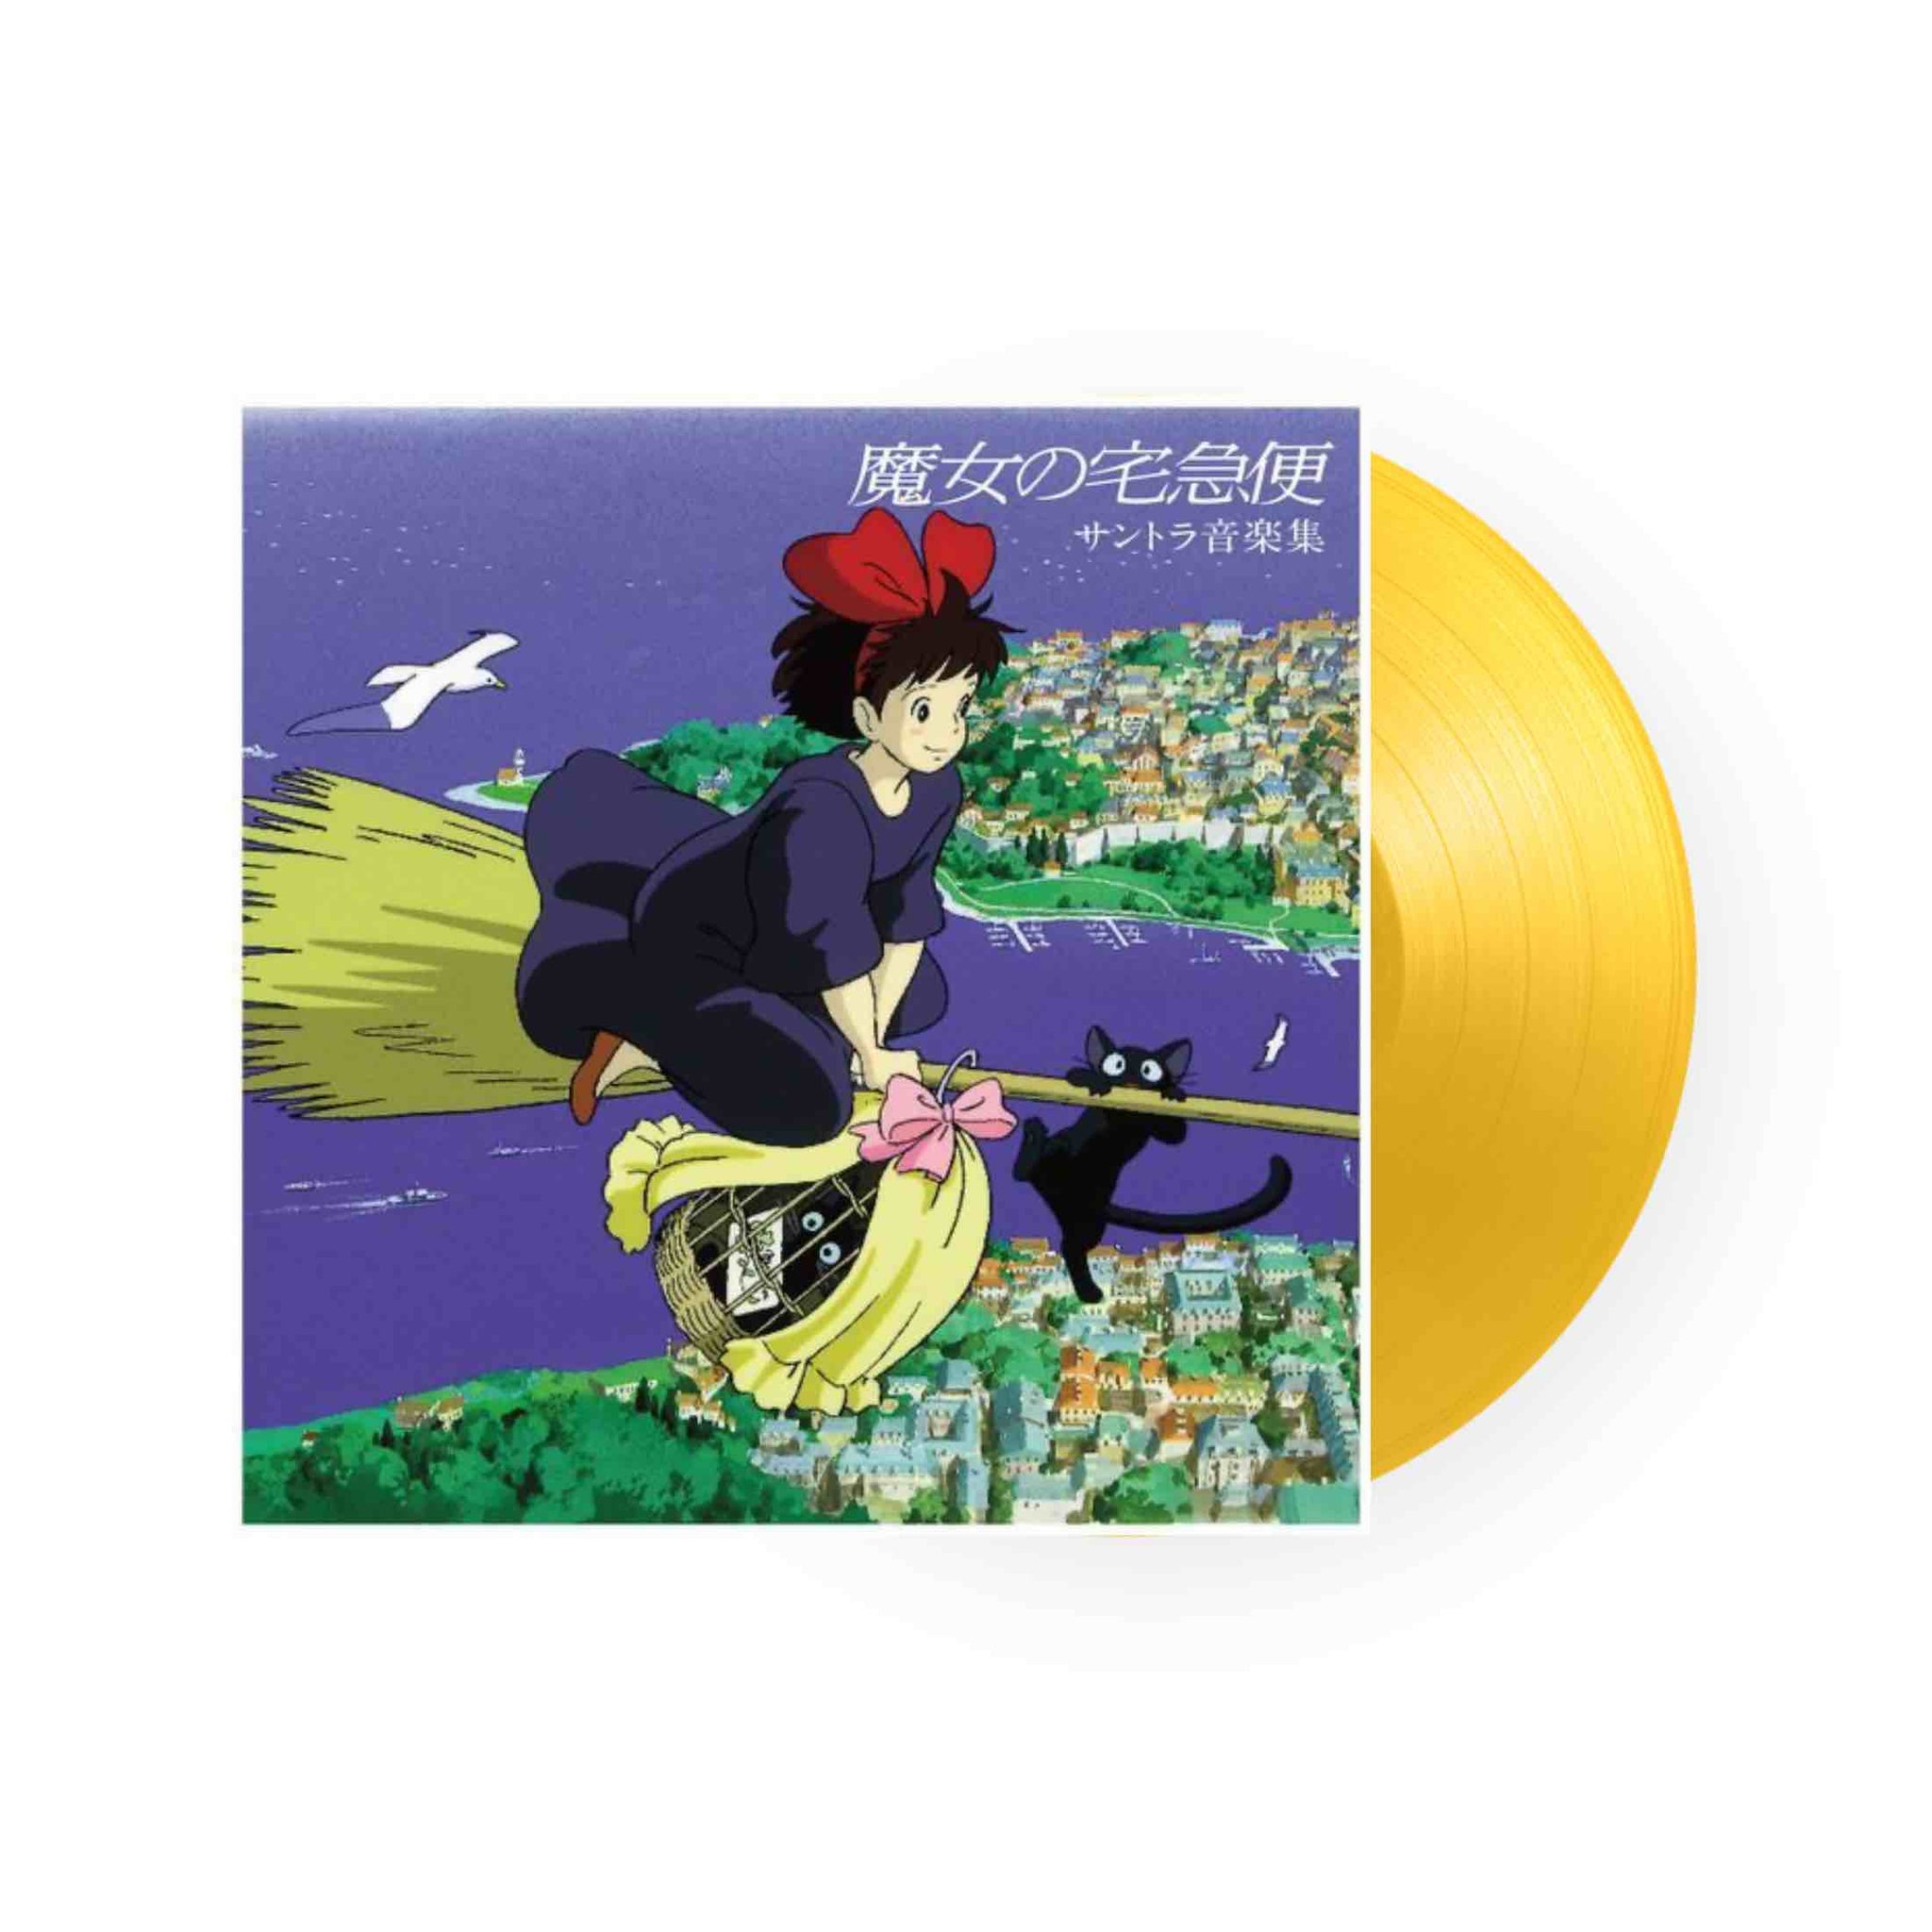 Kiki's Delivery Service - Soundtrack LP (Yellow Vinyl)